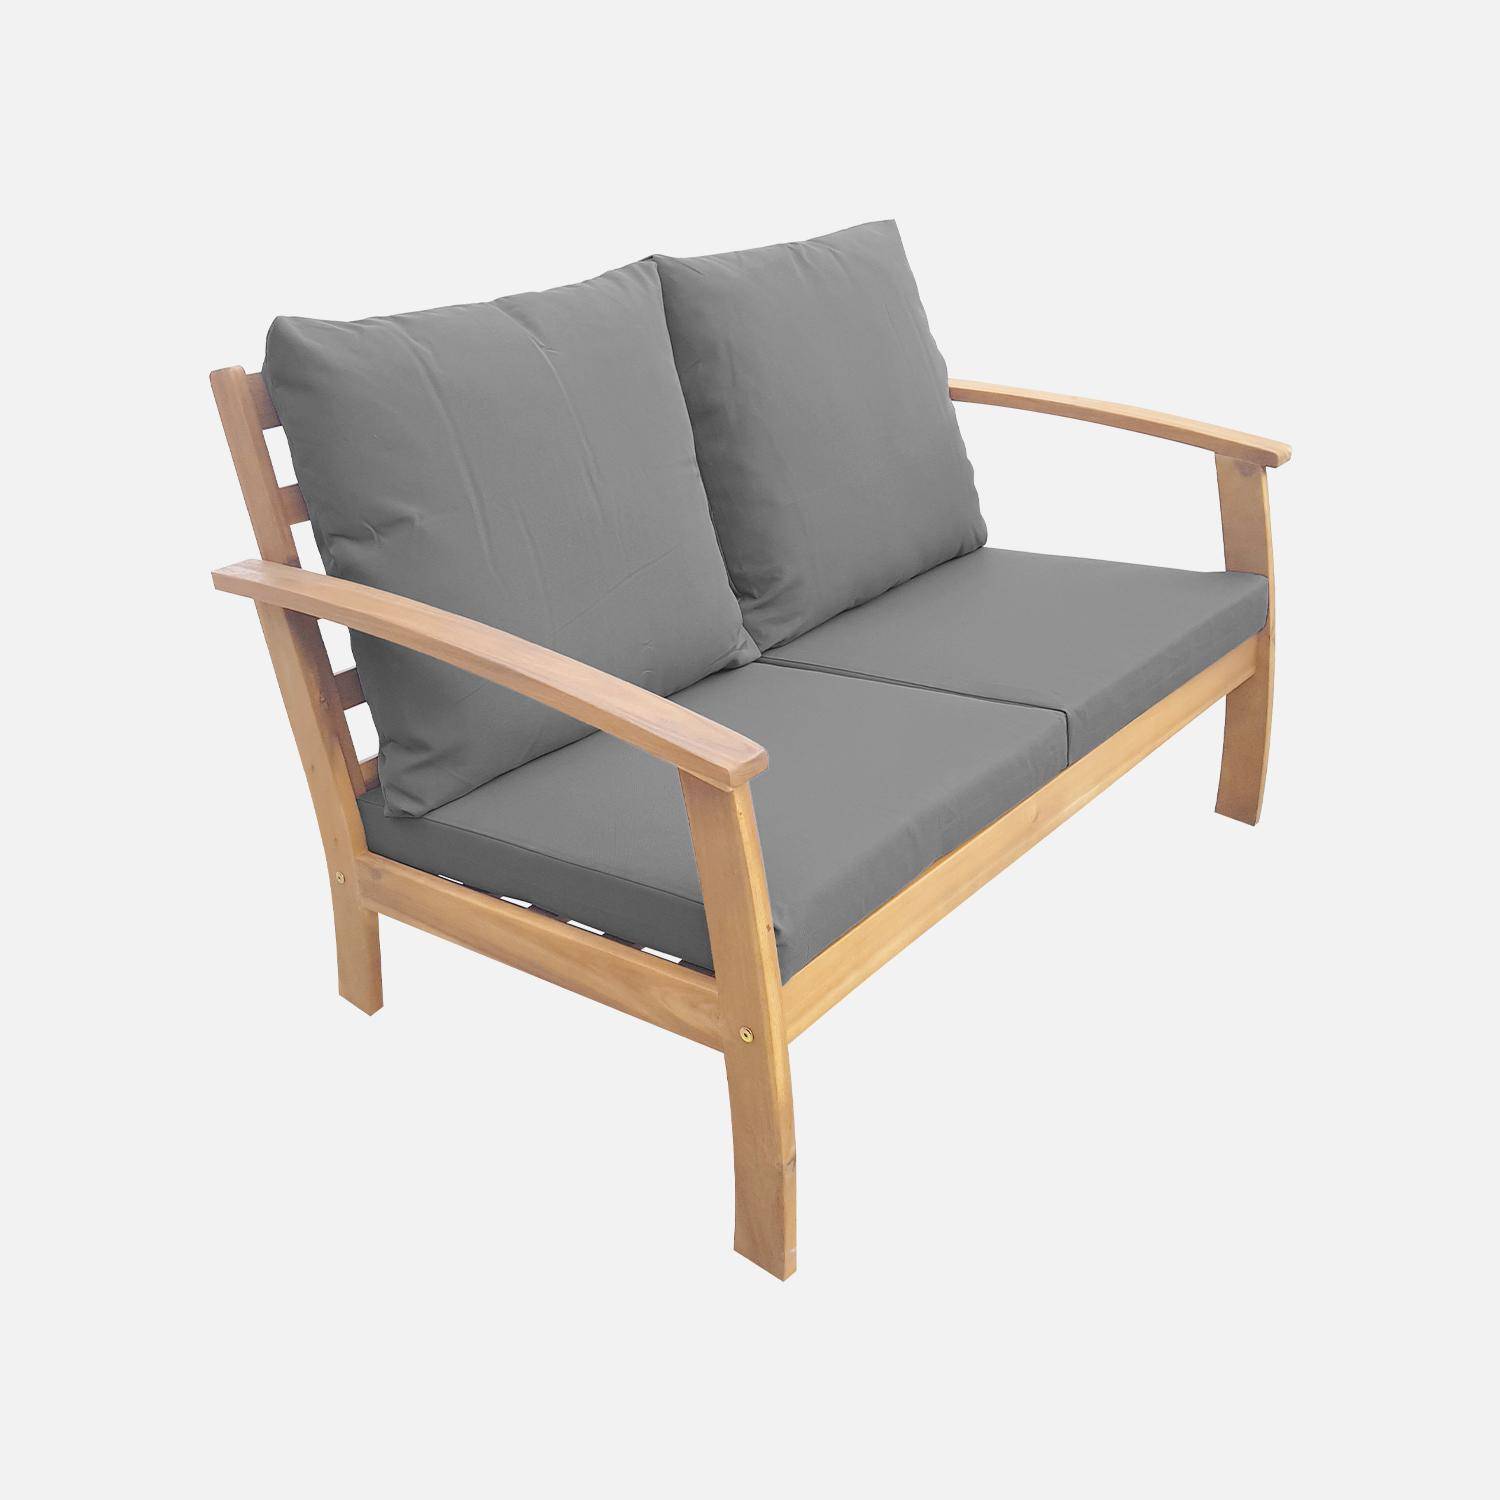 4-seater wooden garden sofa - Acacia wood sofa, armchairs and coffee table, designer piece  - Ushuaia - Grey Photo3